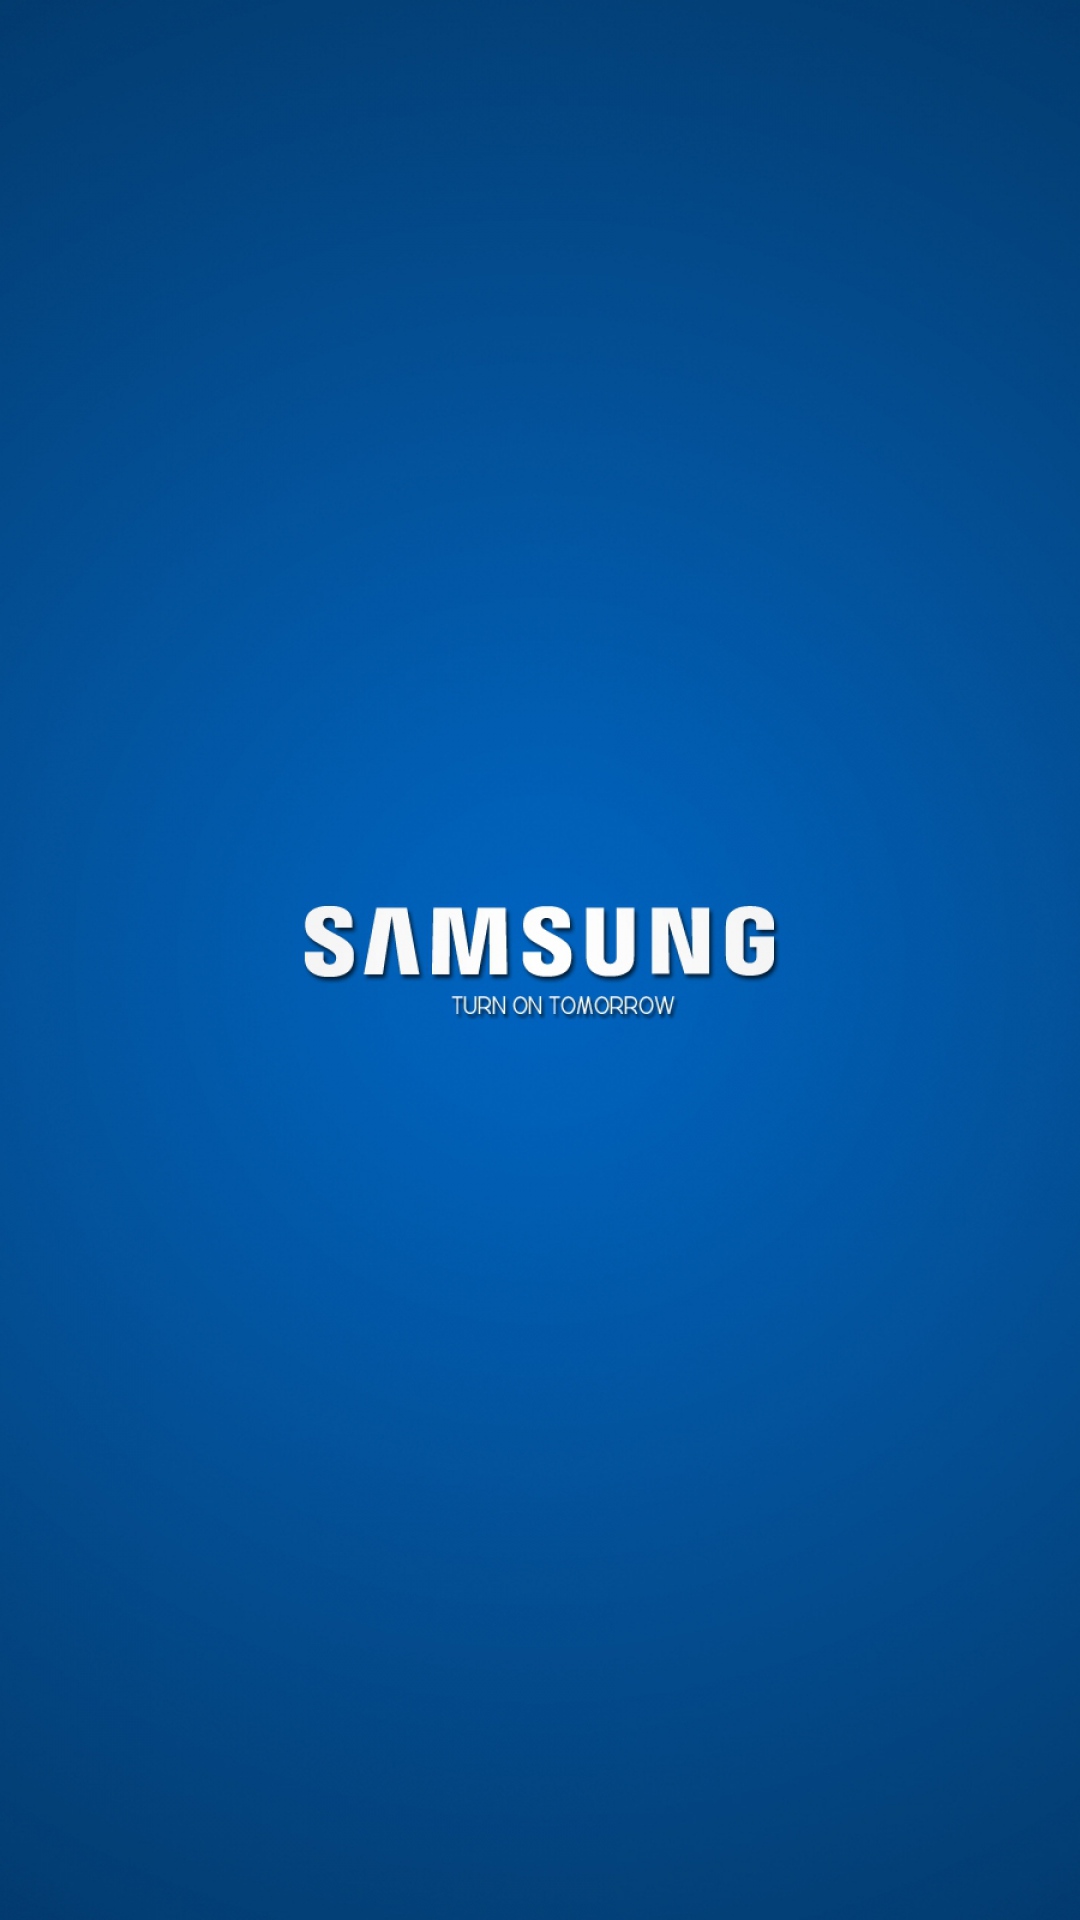 [98+] Samsung Galaxy Logo Wallpapers on WallpaperSafari